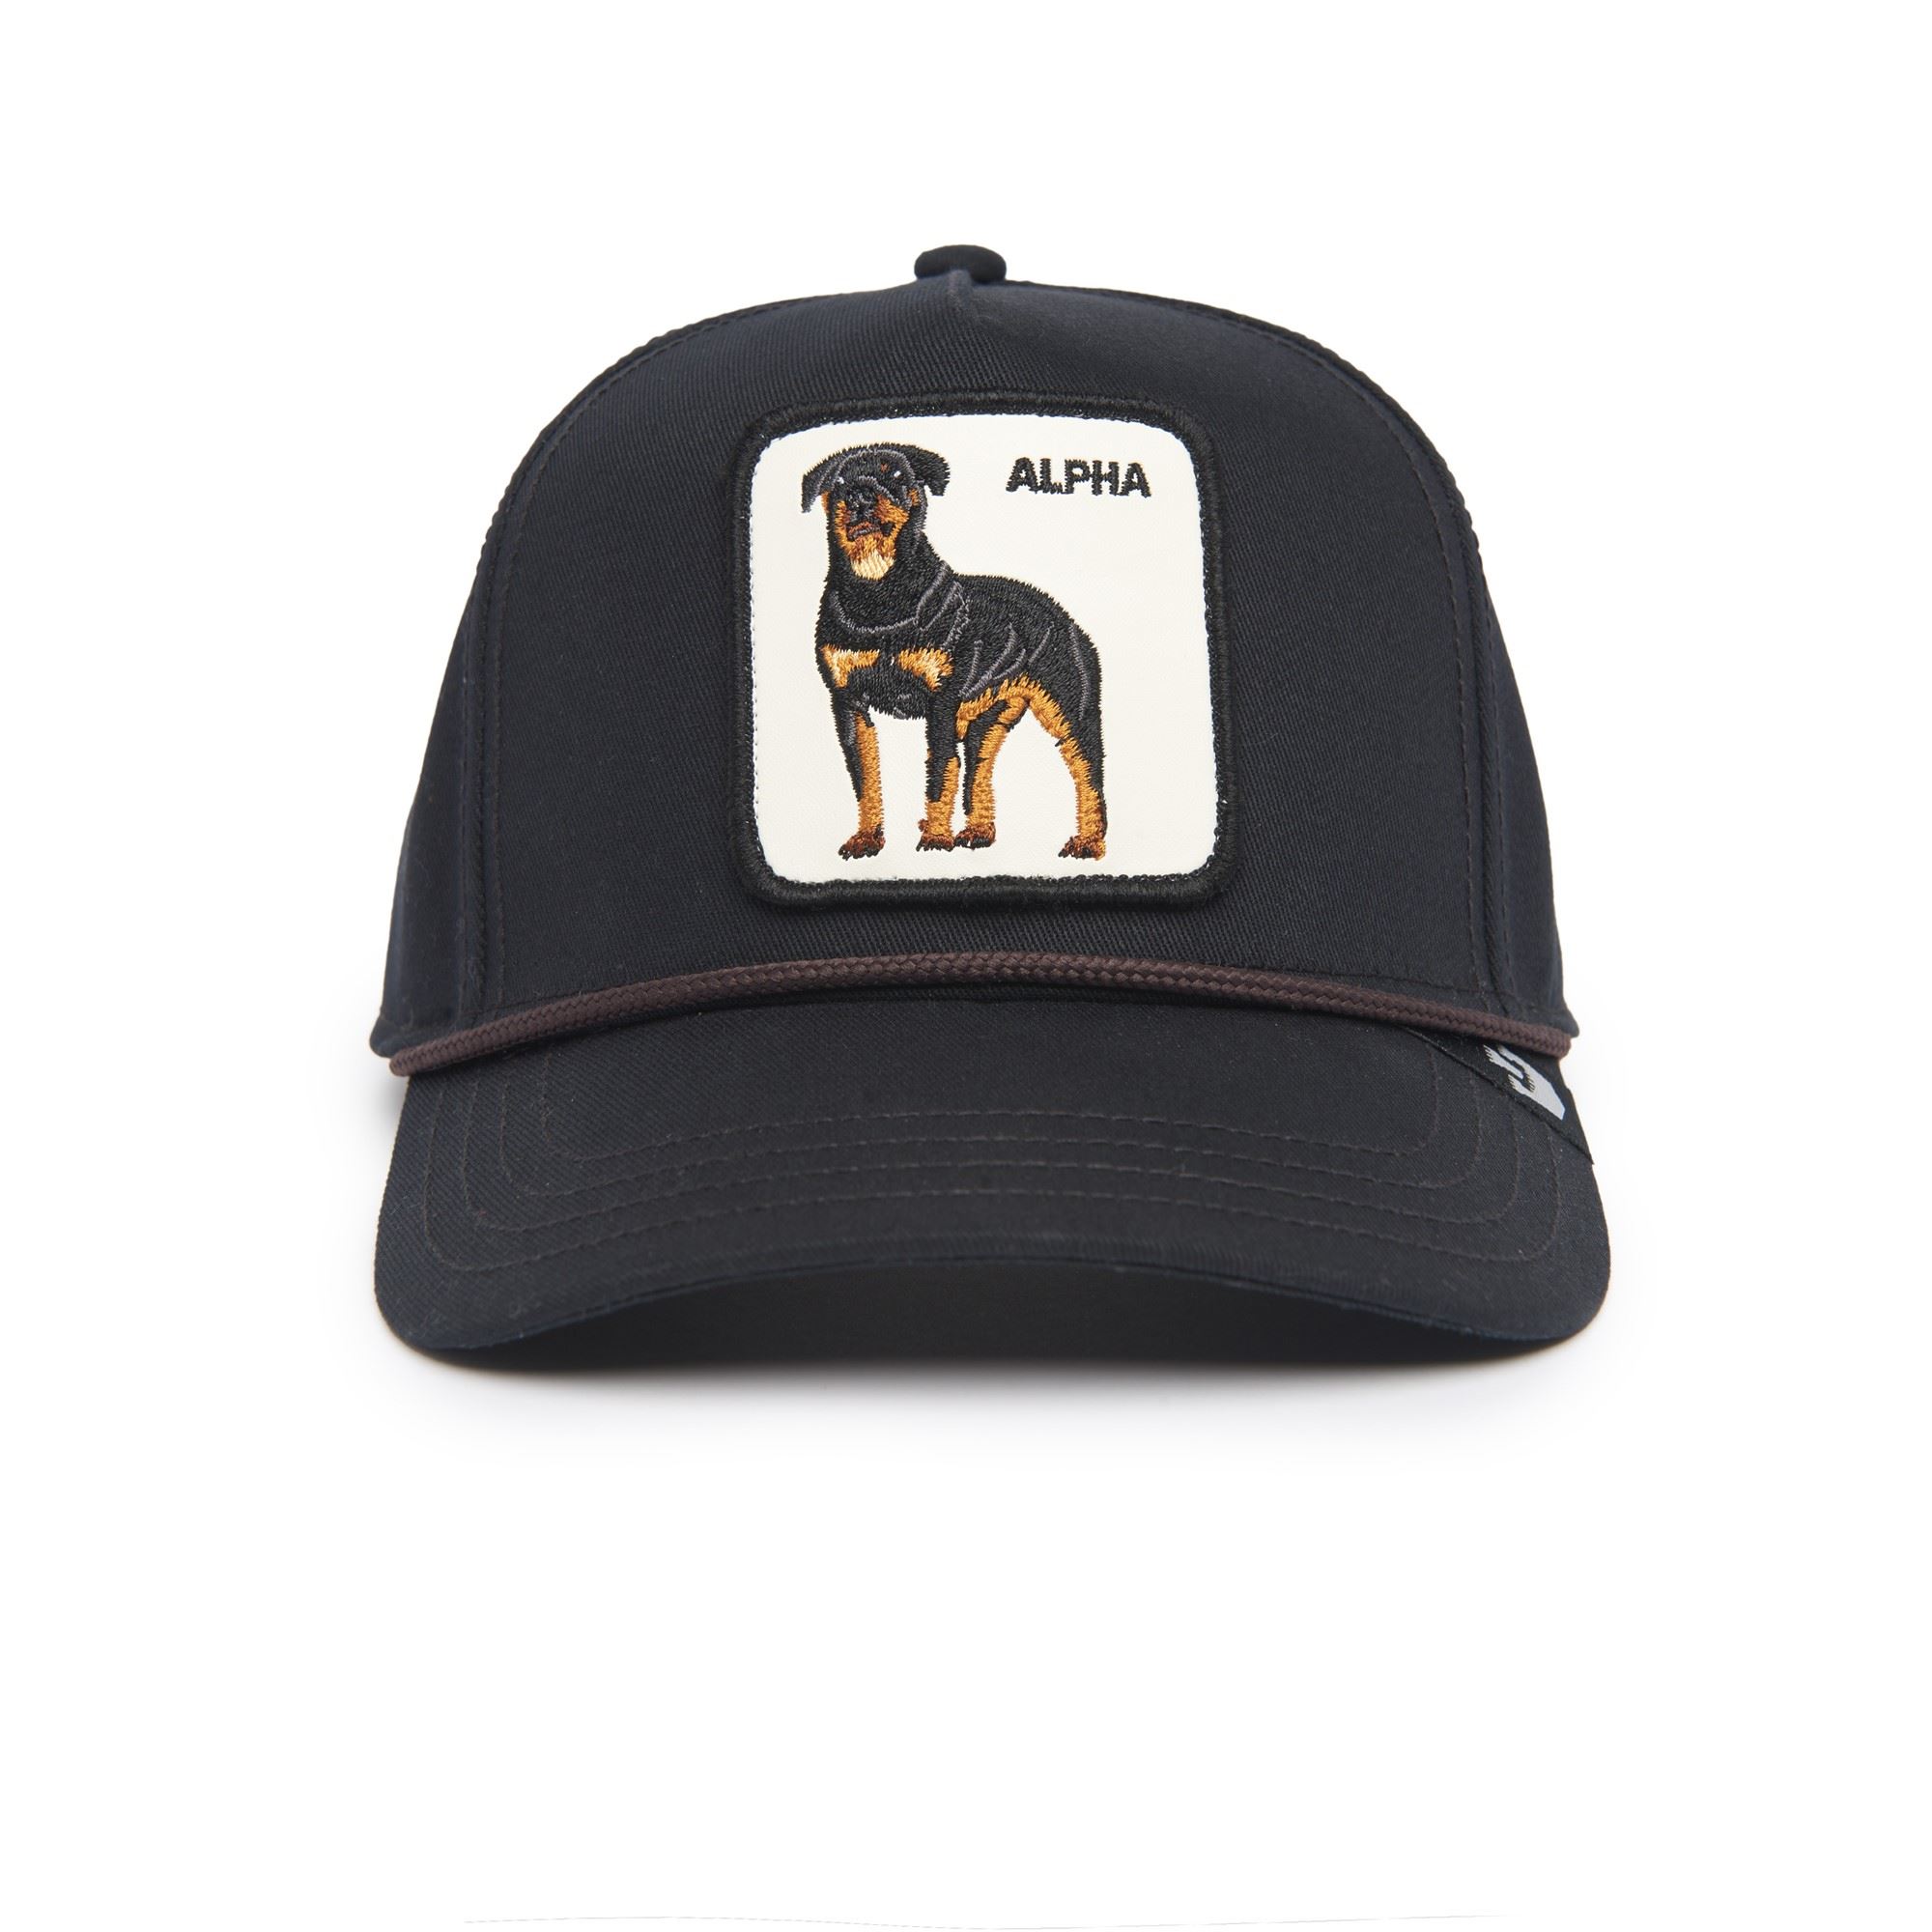 Alpha Dog Black Adjustable Snapback Cap Goorin Bros